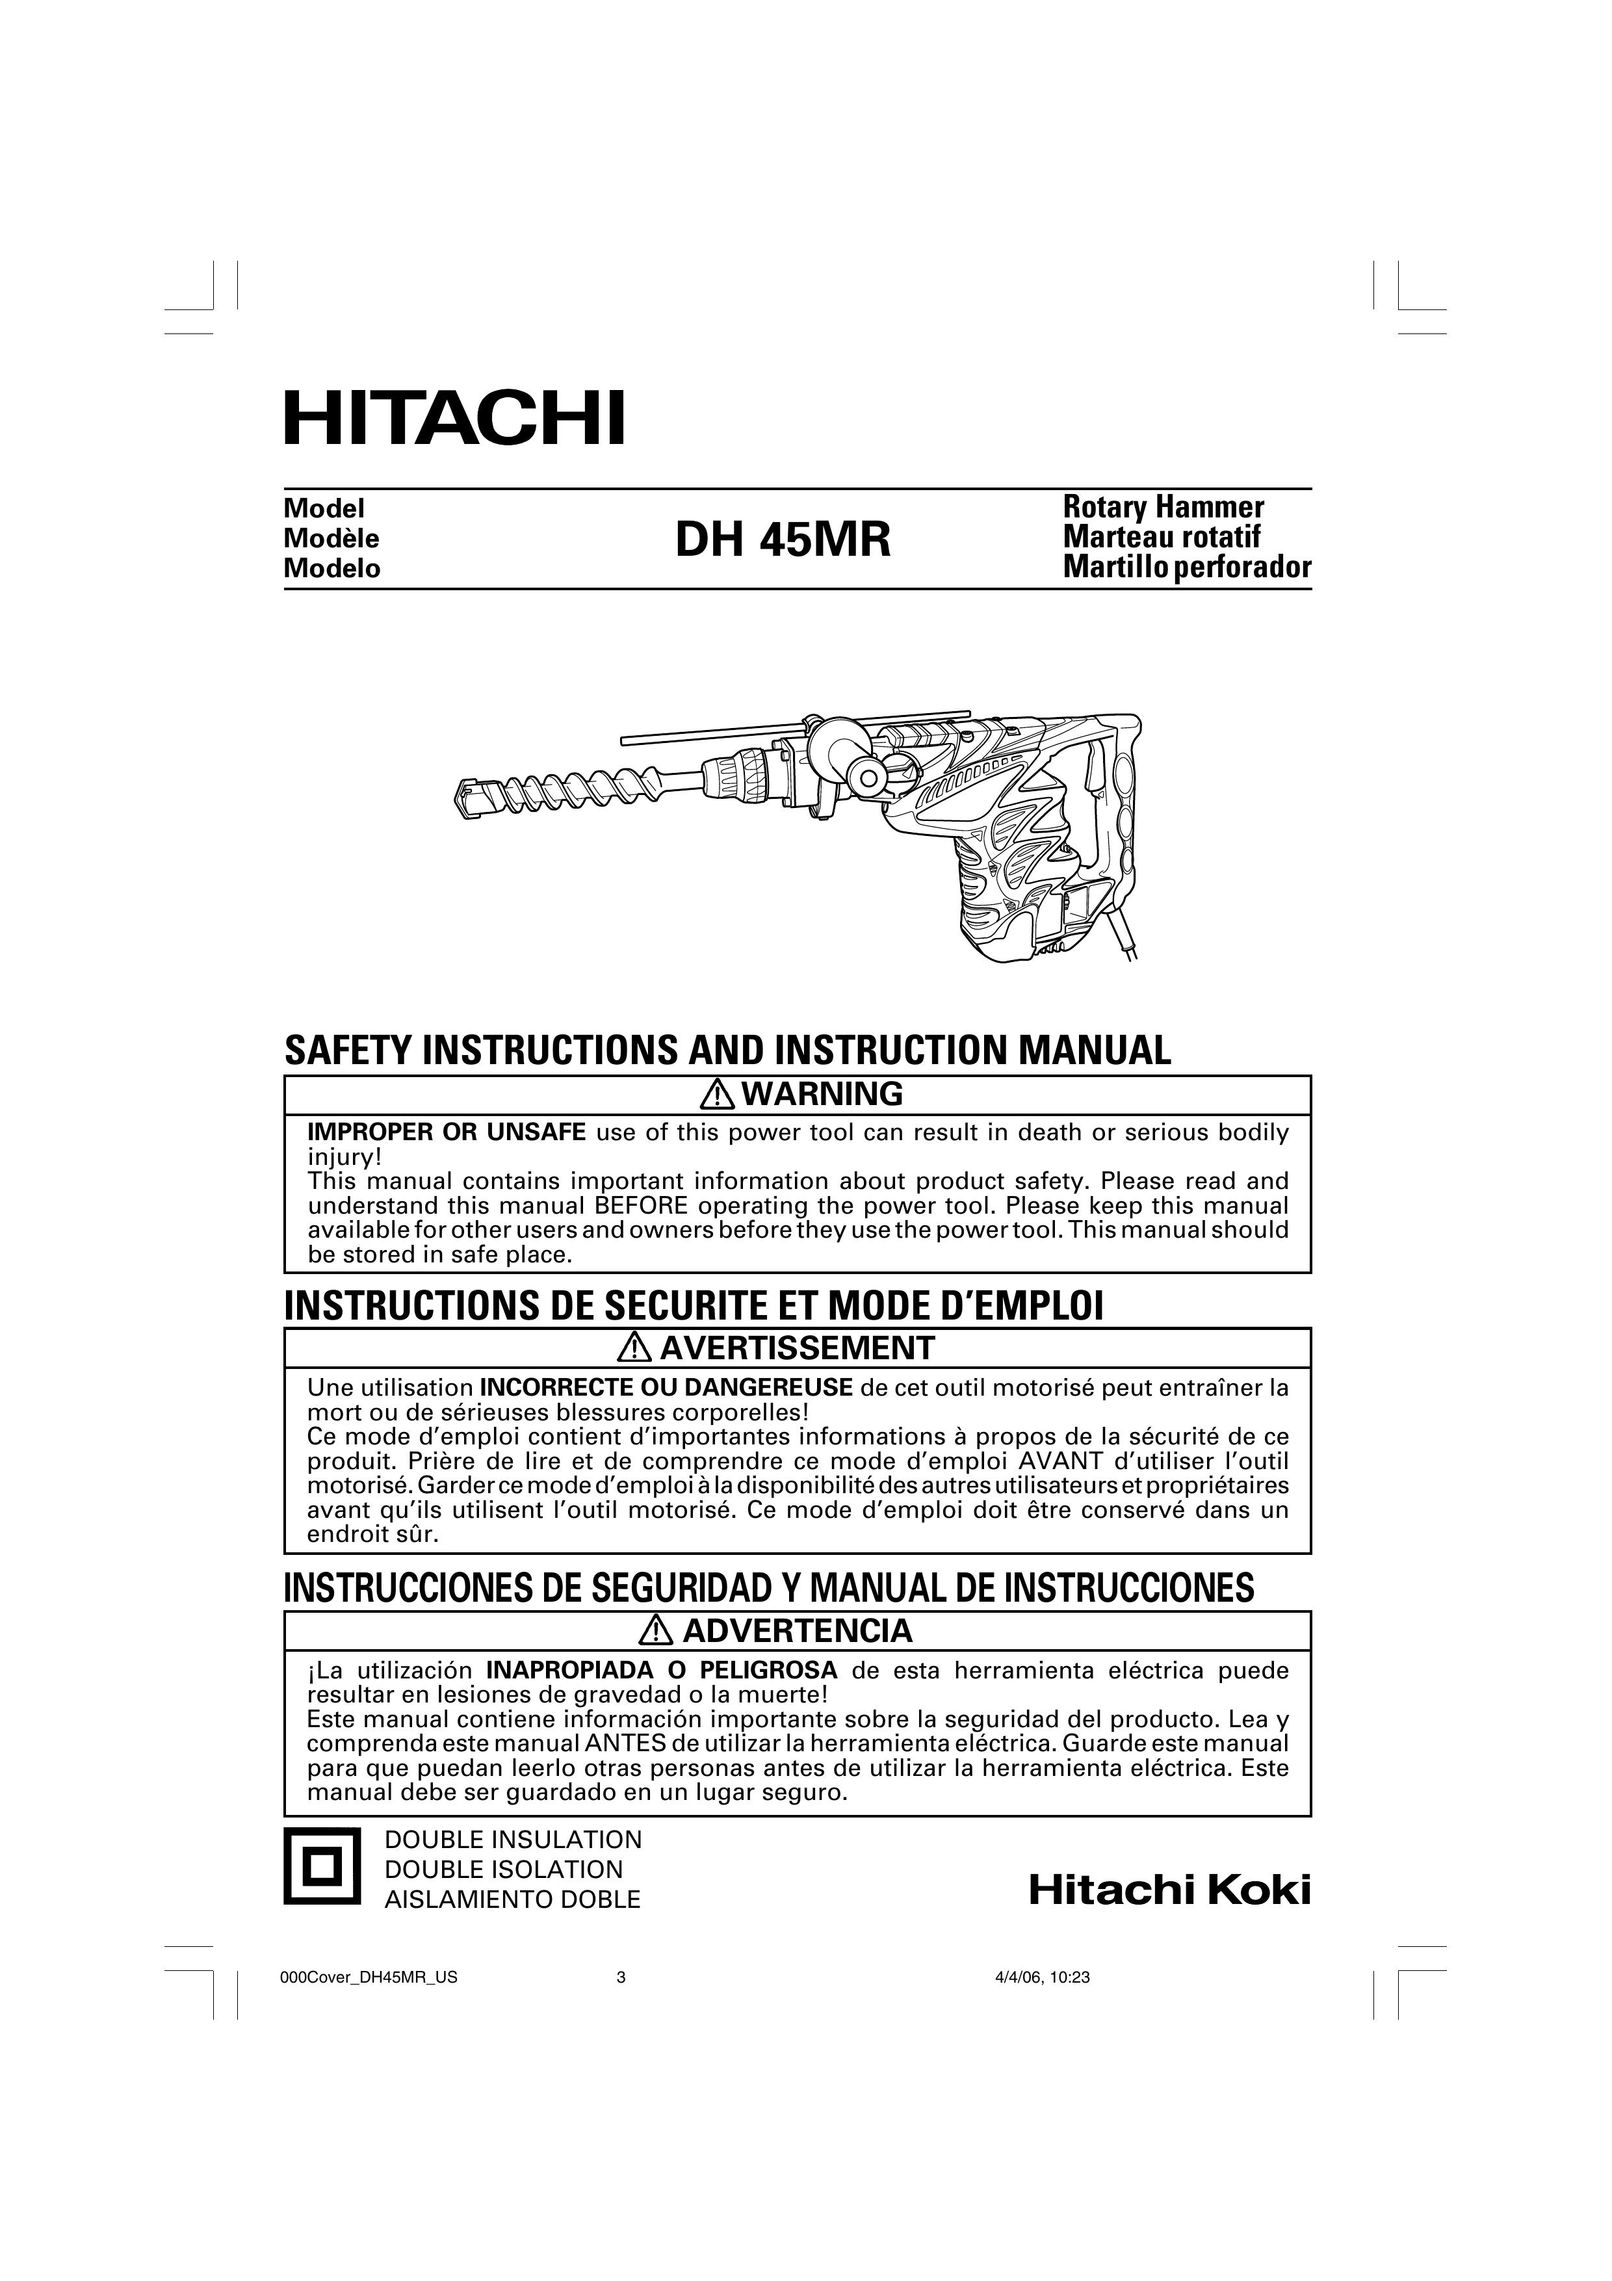 Hitachi DH 45MR Power Hammer User Manual